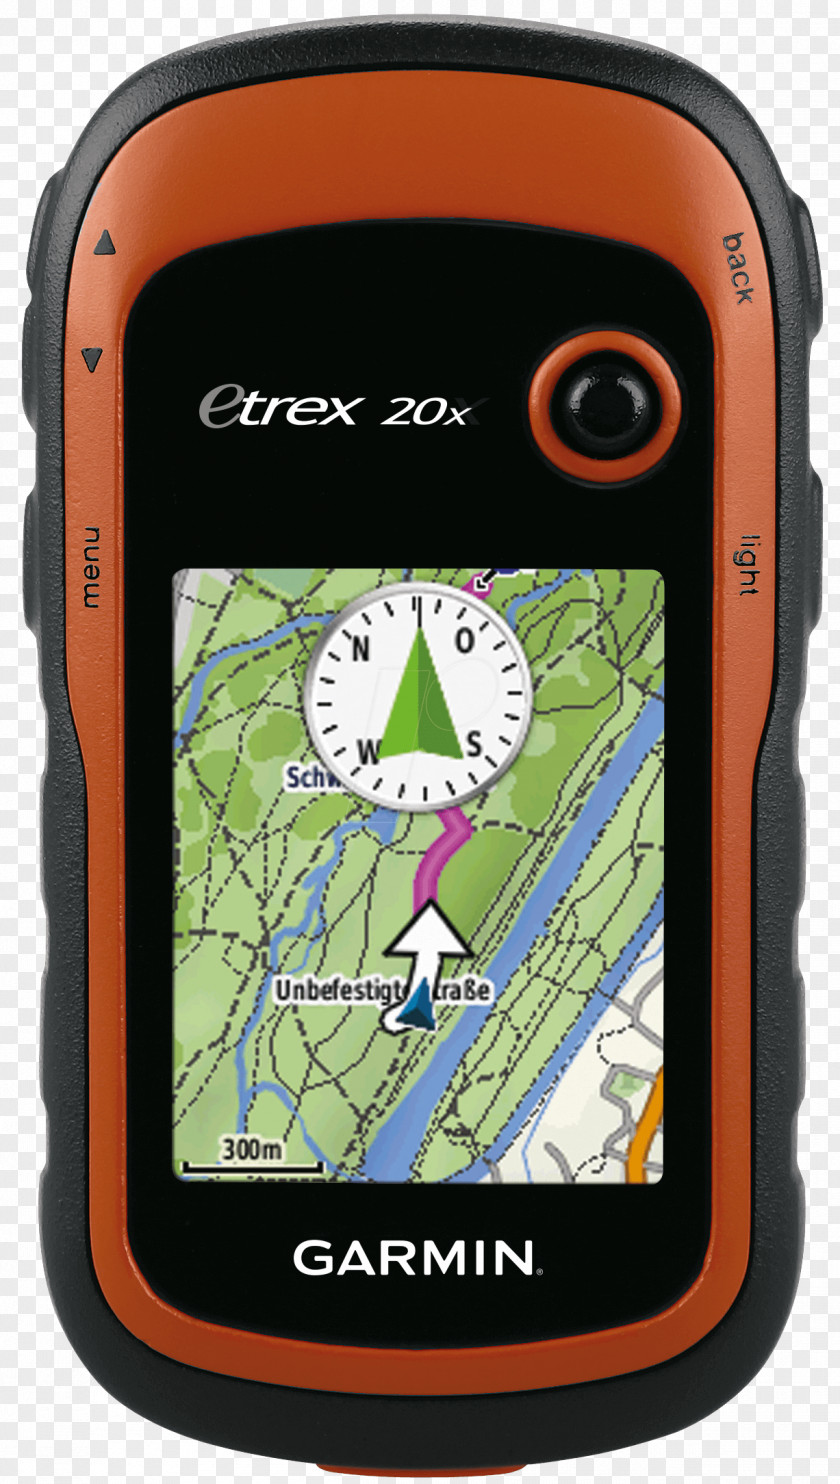 Action Sport GPS Navigation Systems Garmin ETrex 30x 20 Ltd. Handheld Devices PNG